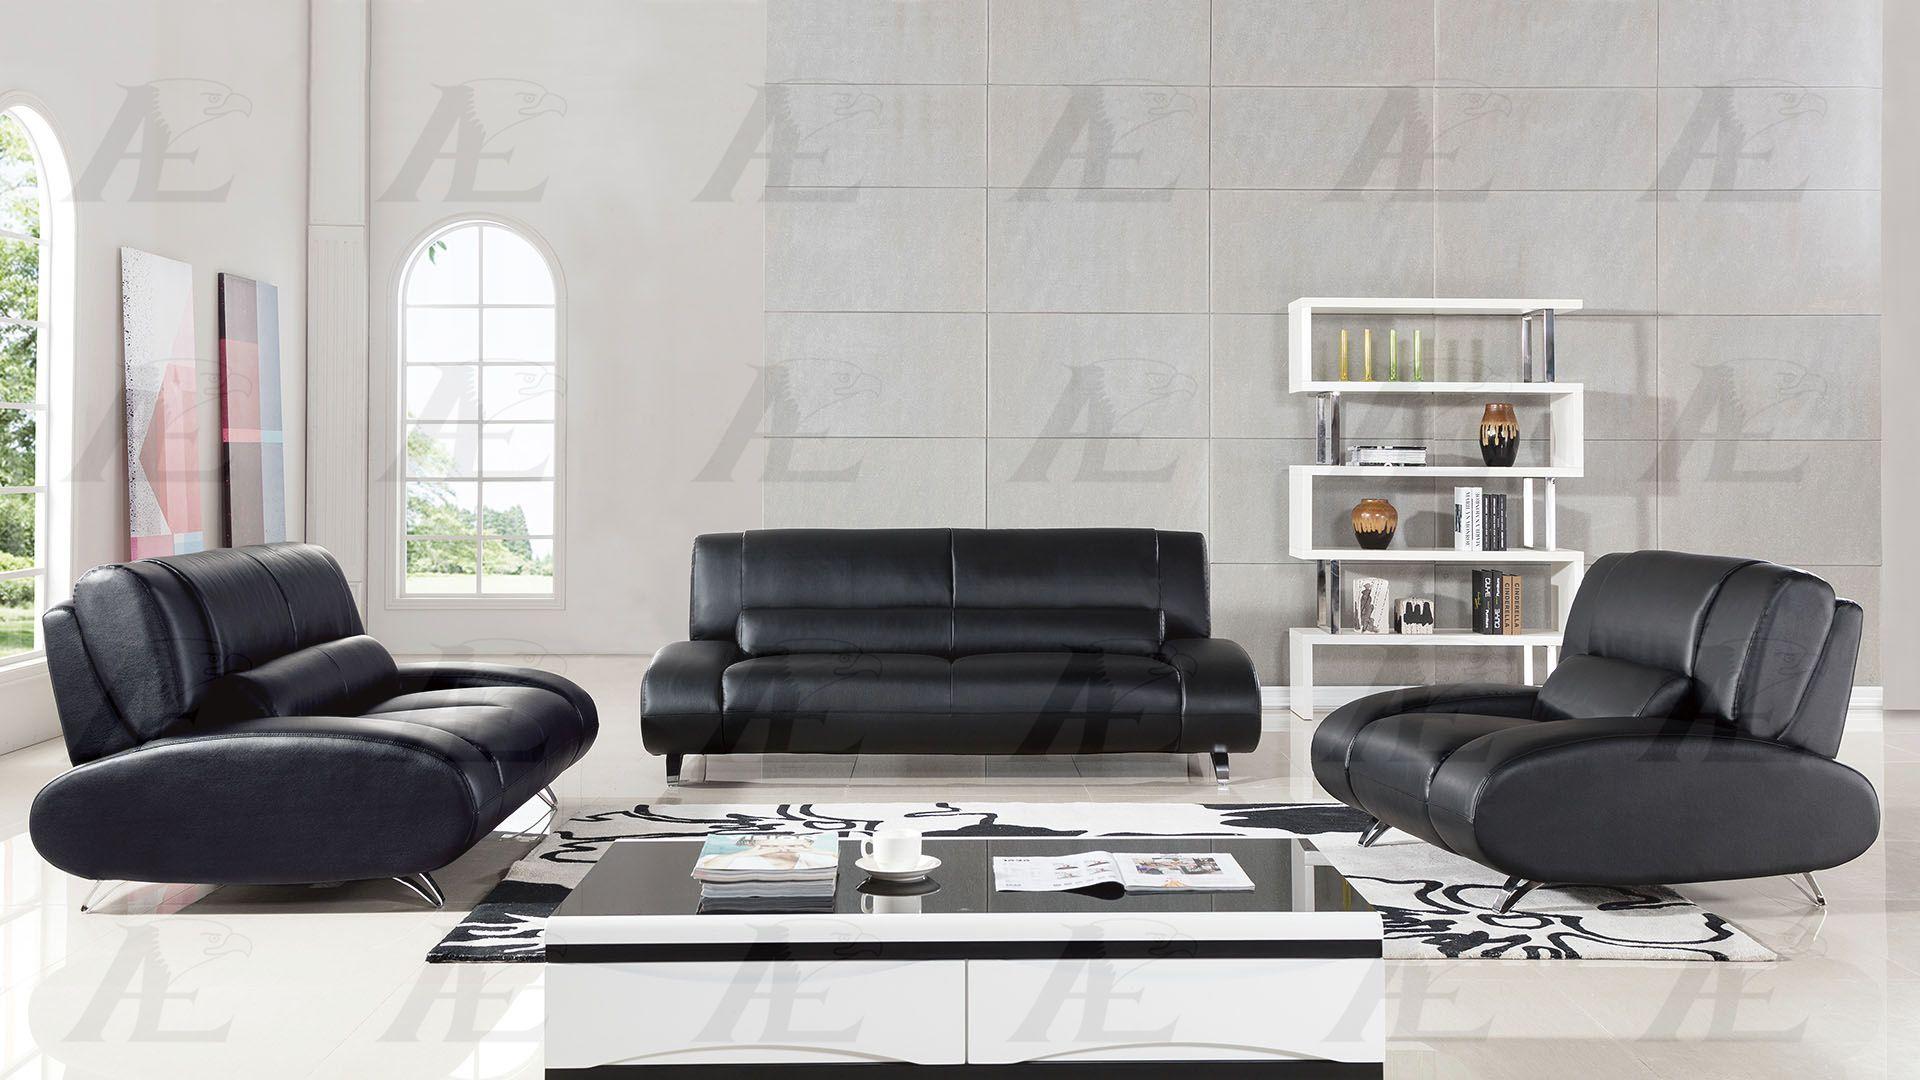 Contemporary, Modern Sofa Set AE728-BK AE728-BK-Set-3 in Black Bonded Leather